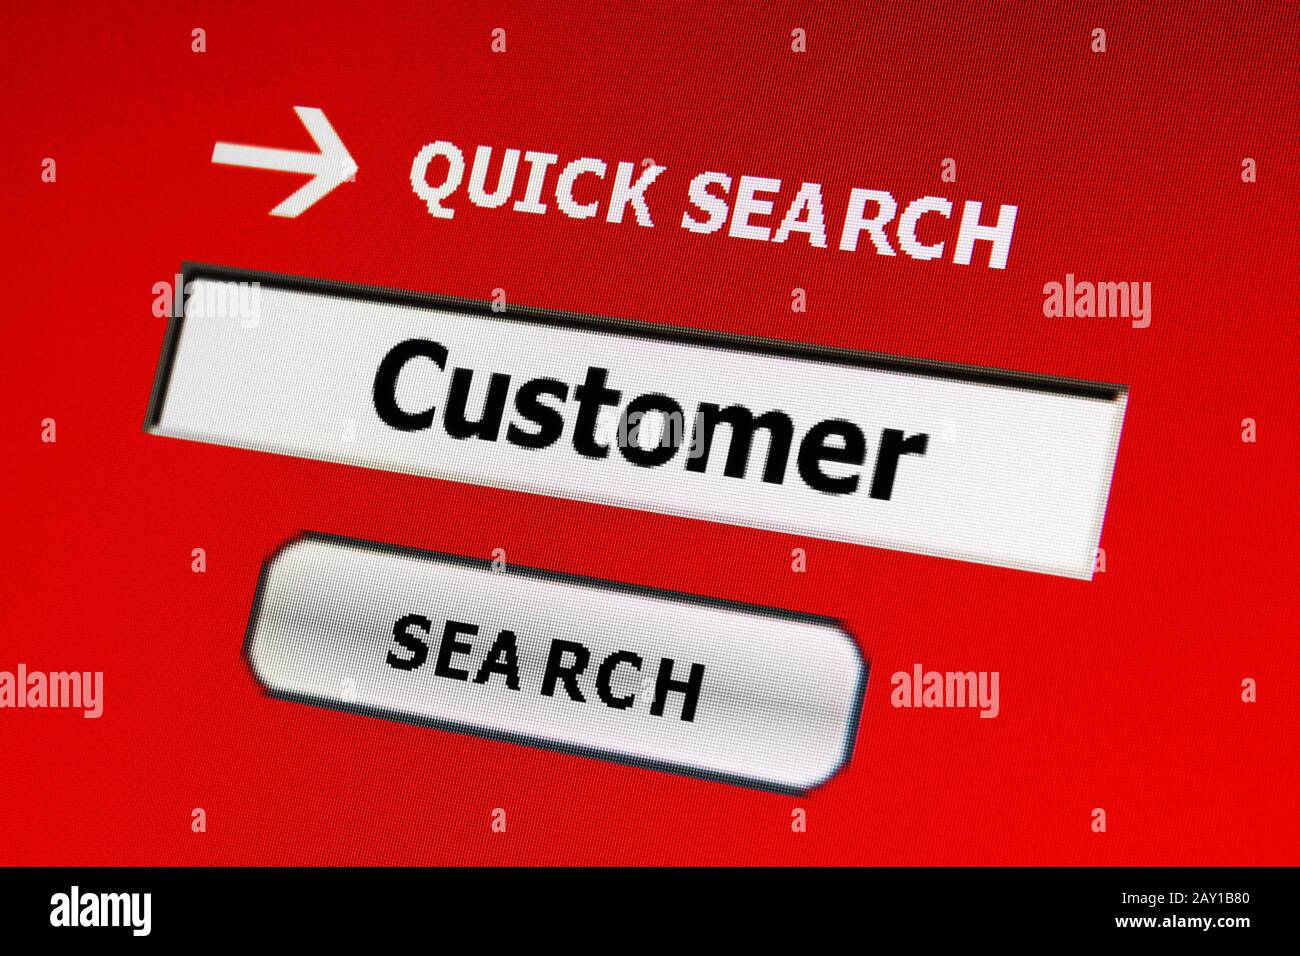 Web customer search Stock Photo